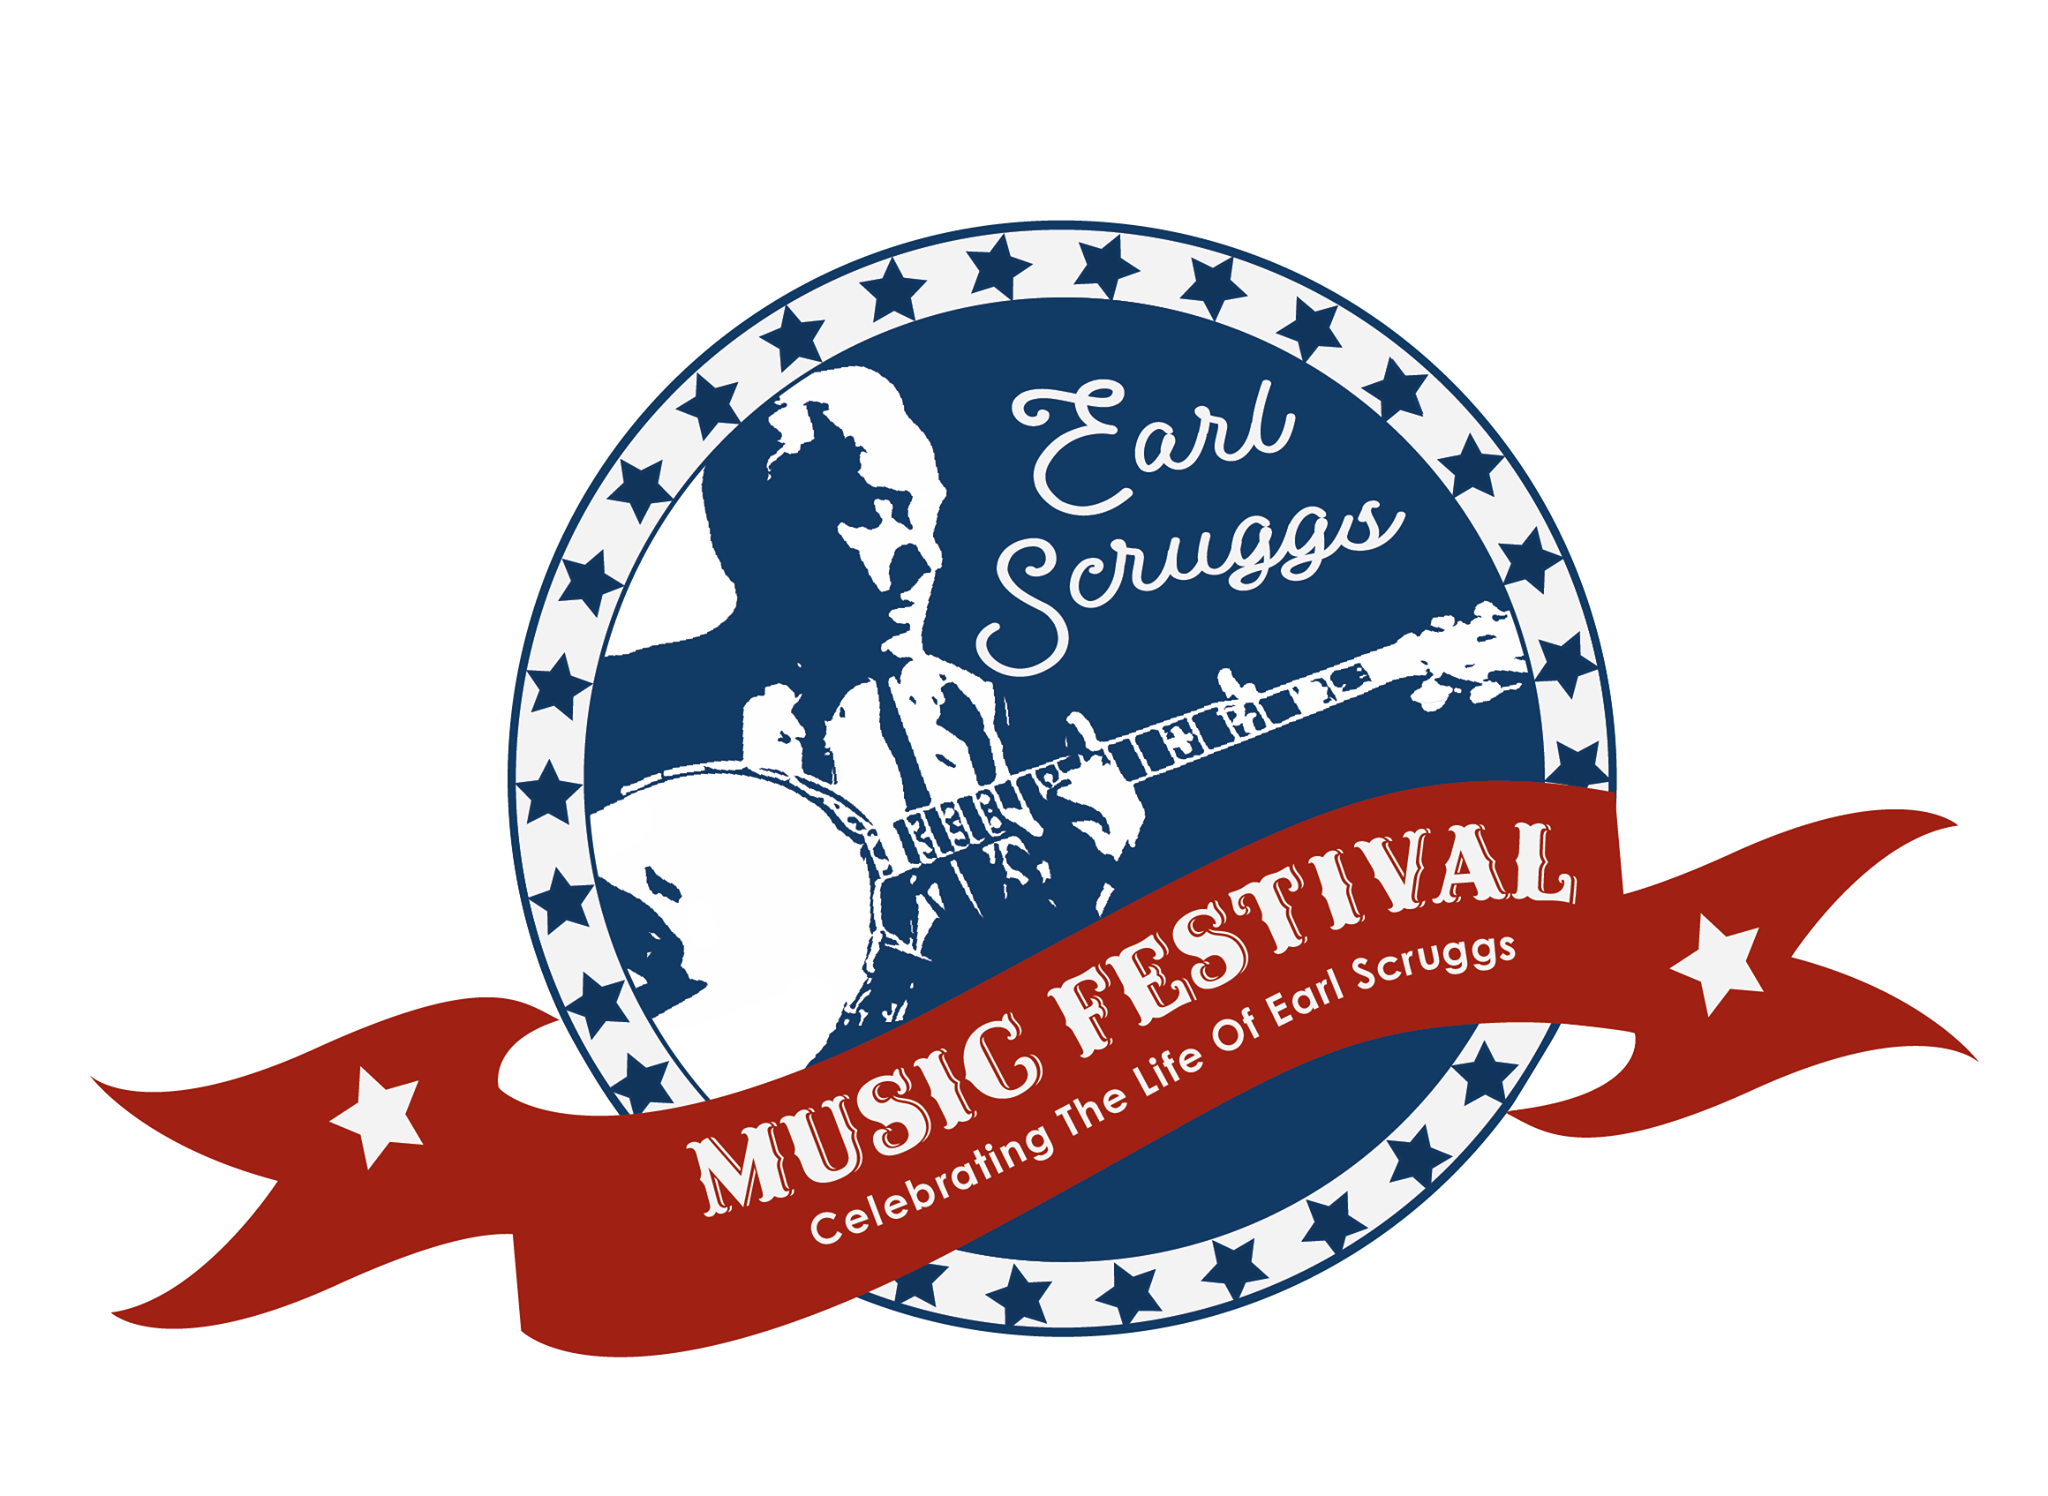 Earl Scruggs Music Festival